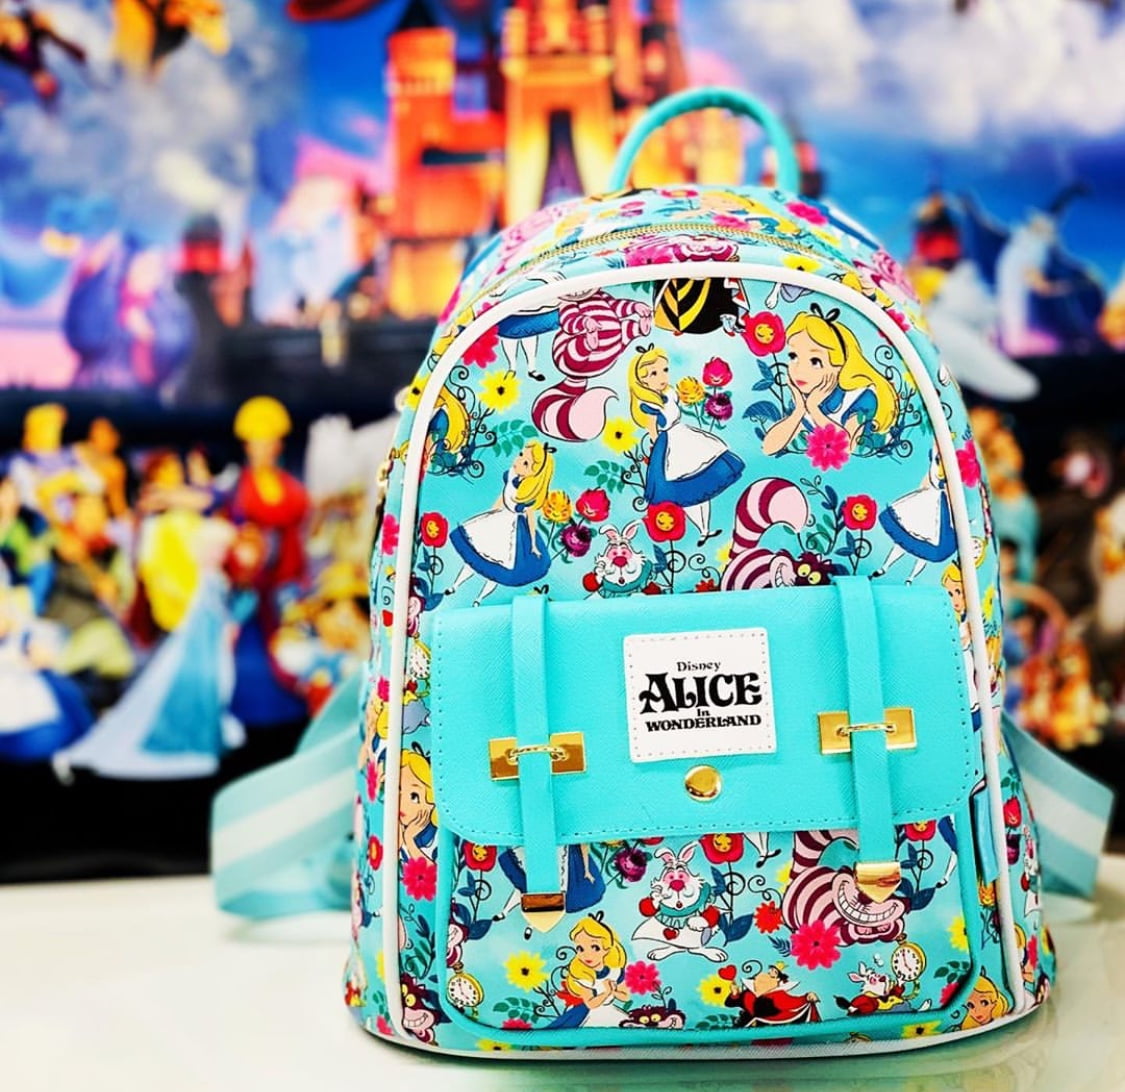 Alice in wonderland bag